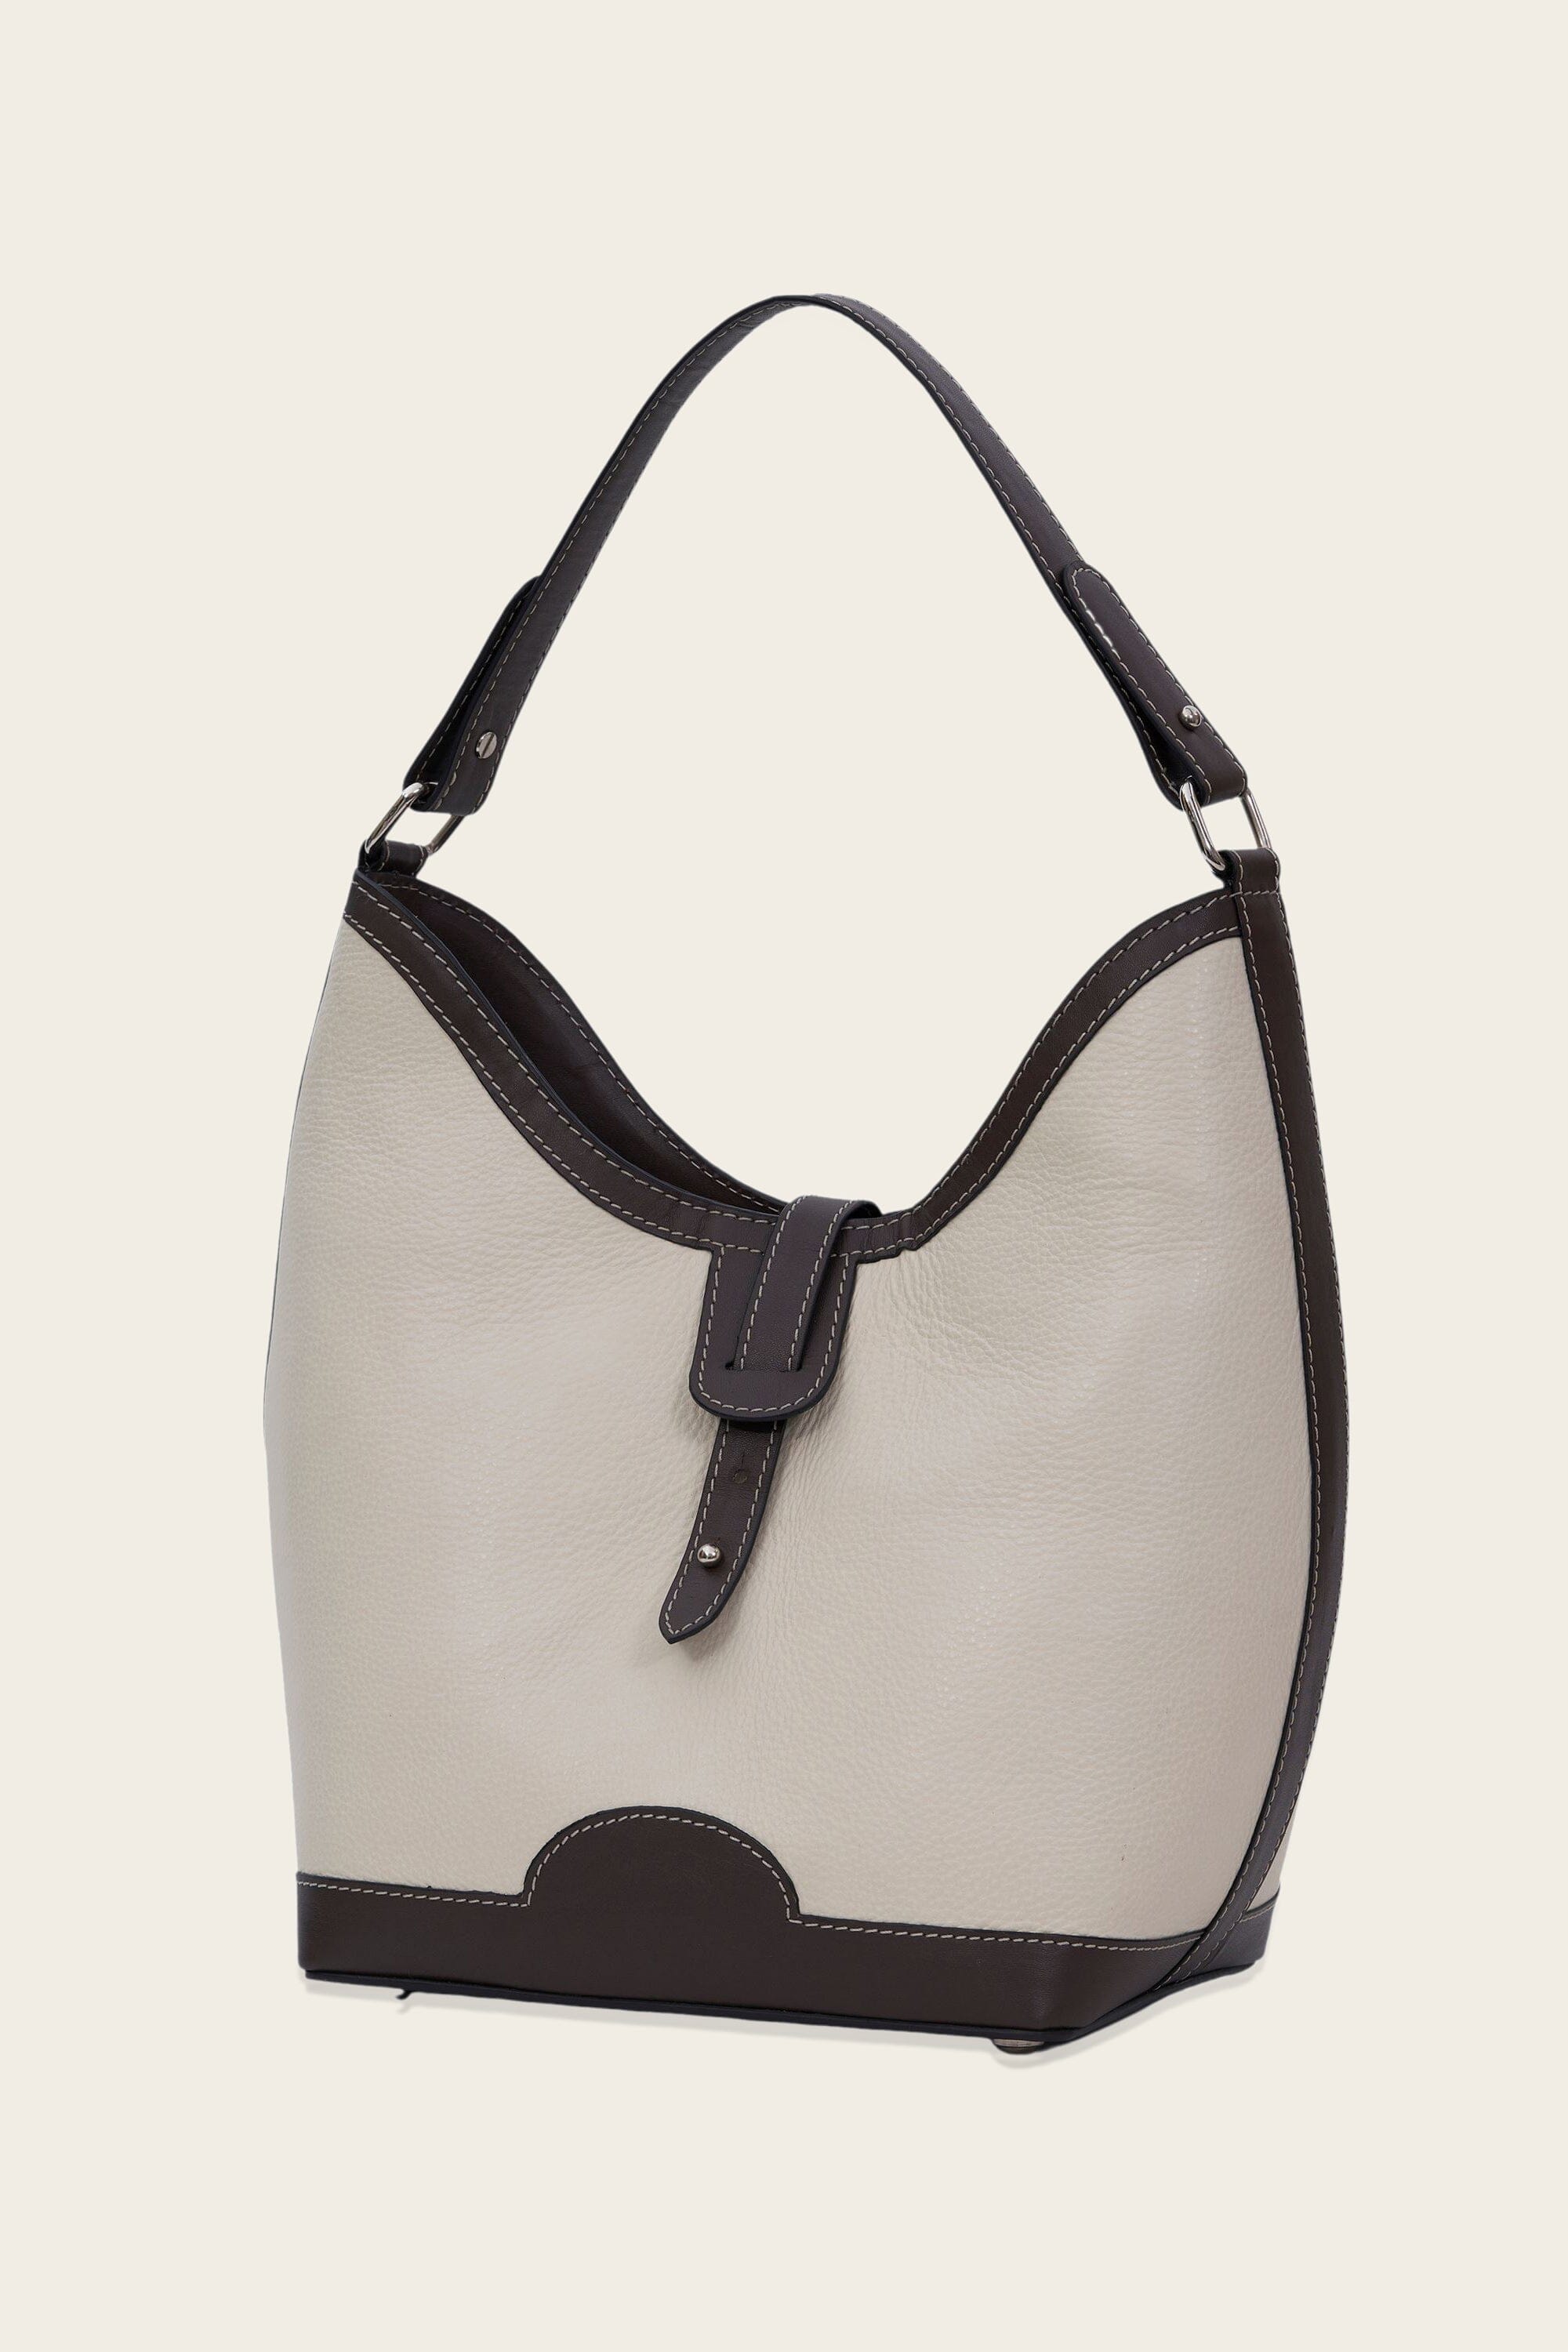 Barrel Top Handle Bag in Cream & Black